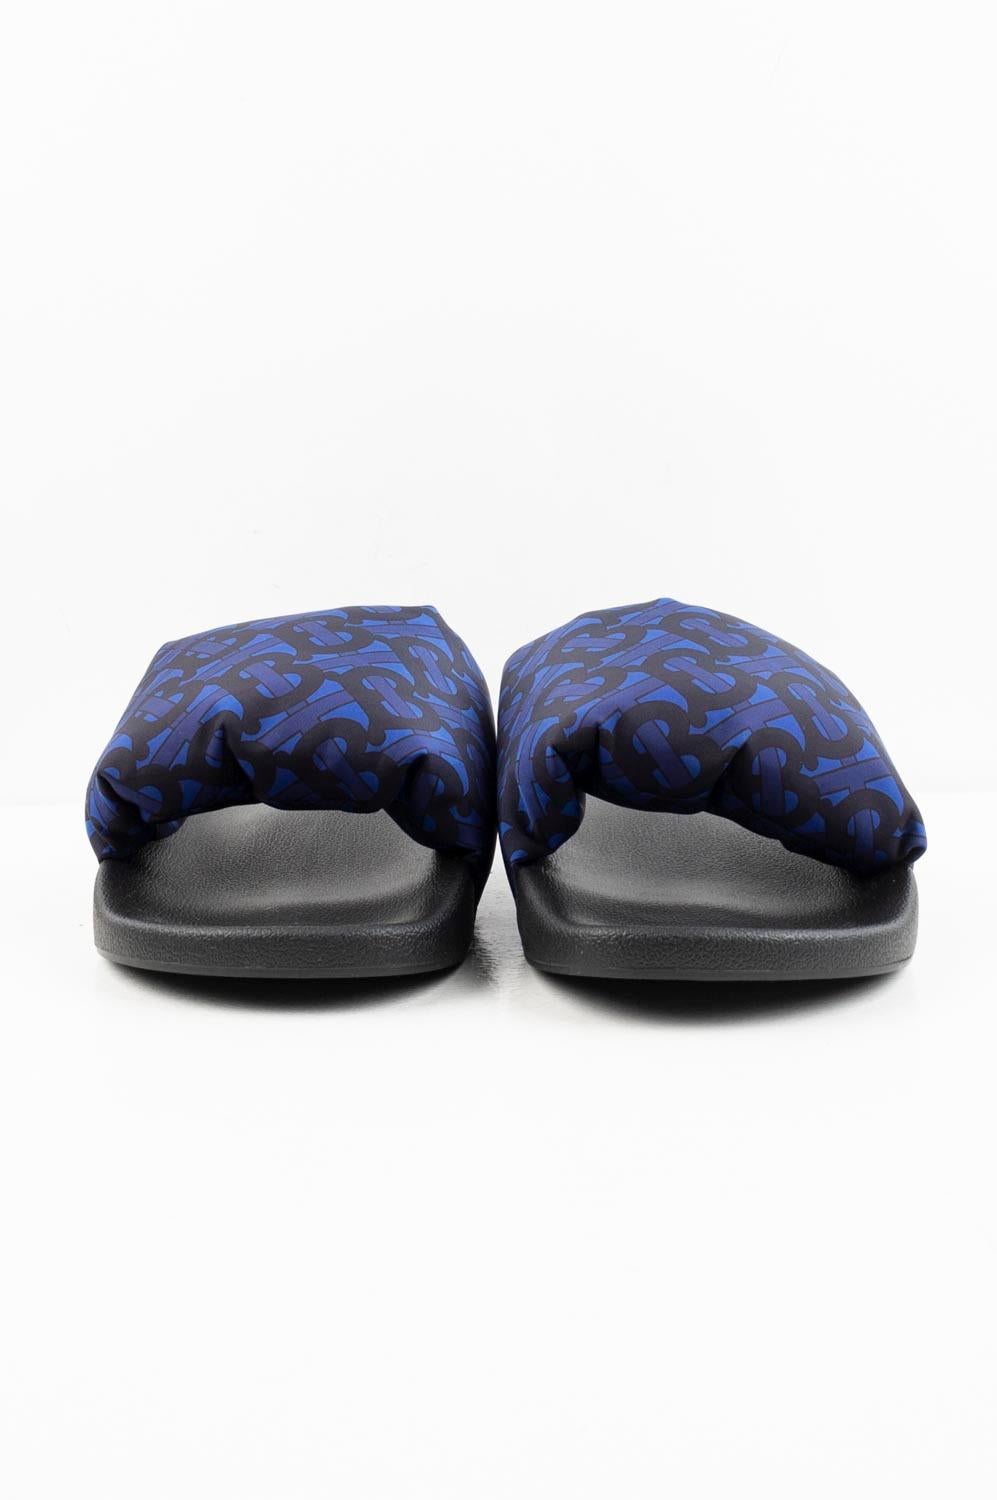 Violet Burberry Men New Sliders Slippers Size 45EUR, USA11, UK 10 ½, S327 en vente